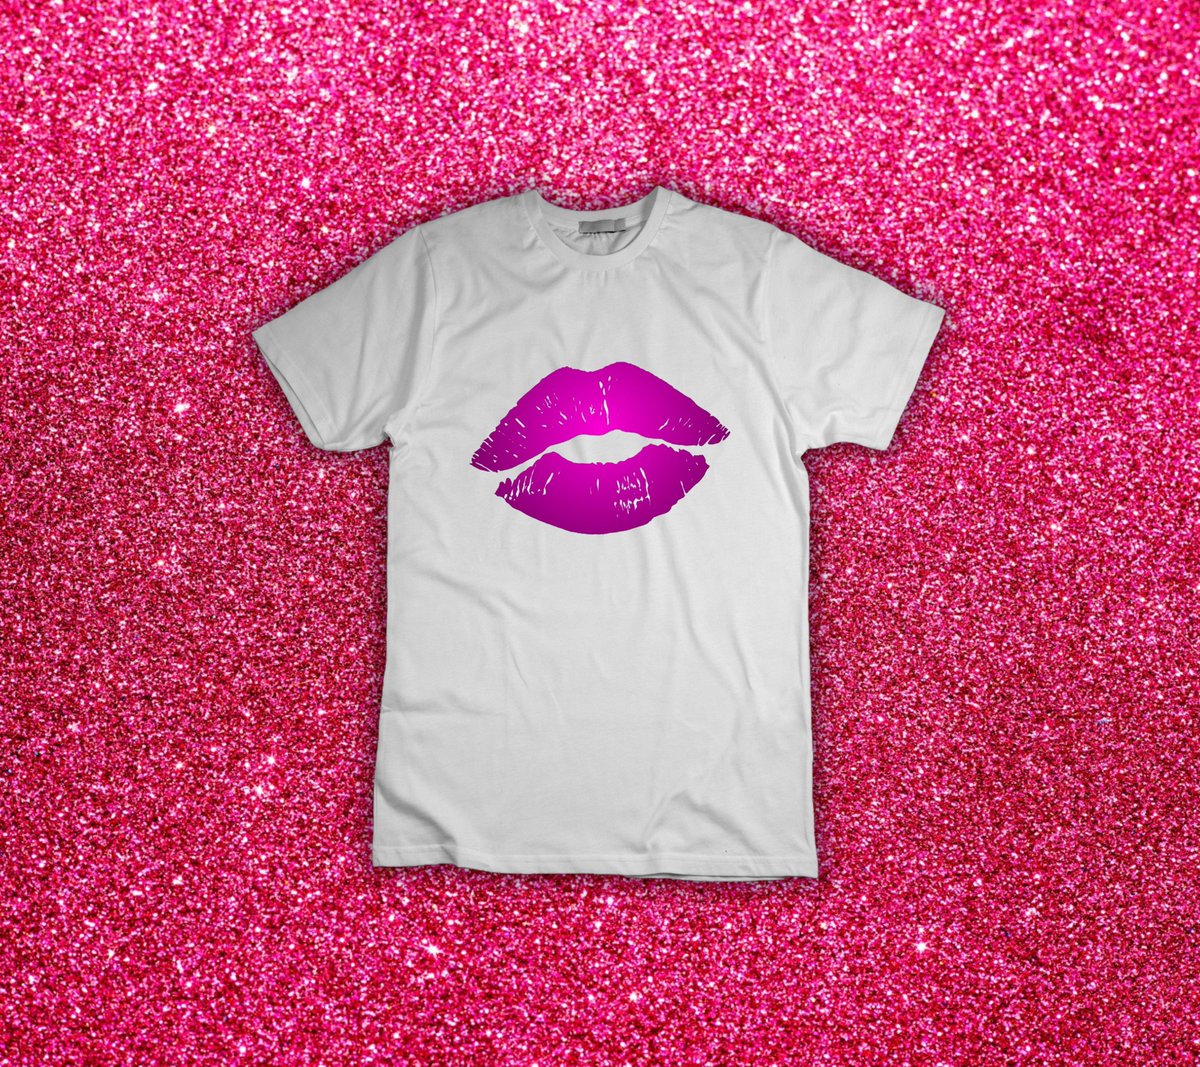 #TeePublic #kiss #kissing #KISSOFLIFE #lips #sexylips #sexygirl #sexy #sexylady #lipstick #kissmark #kisstshirt
GET YOURS IMMEDIATELY👉👉👉teepublic.com/t-shirt/589945…